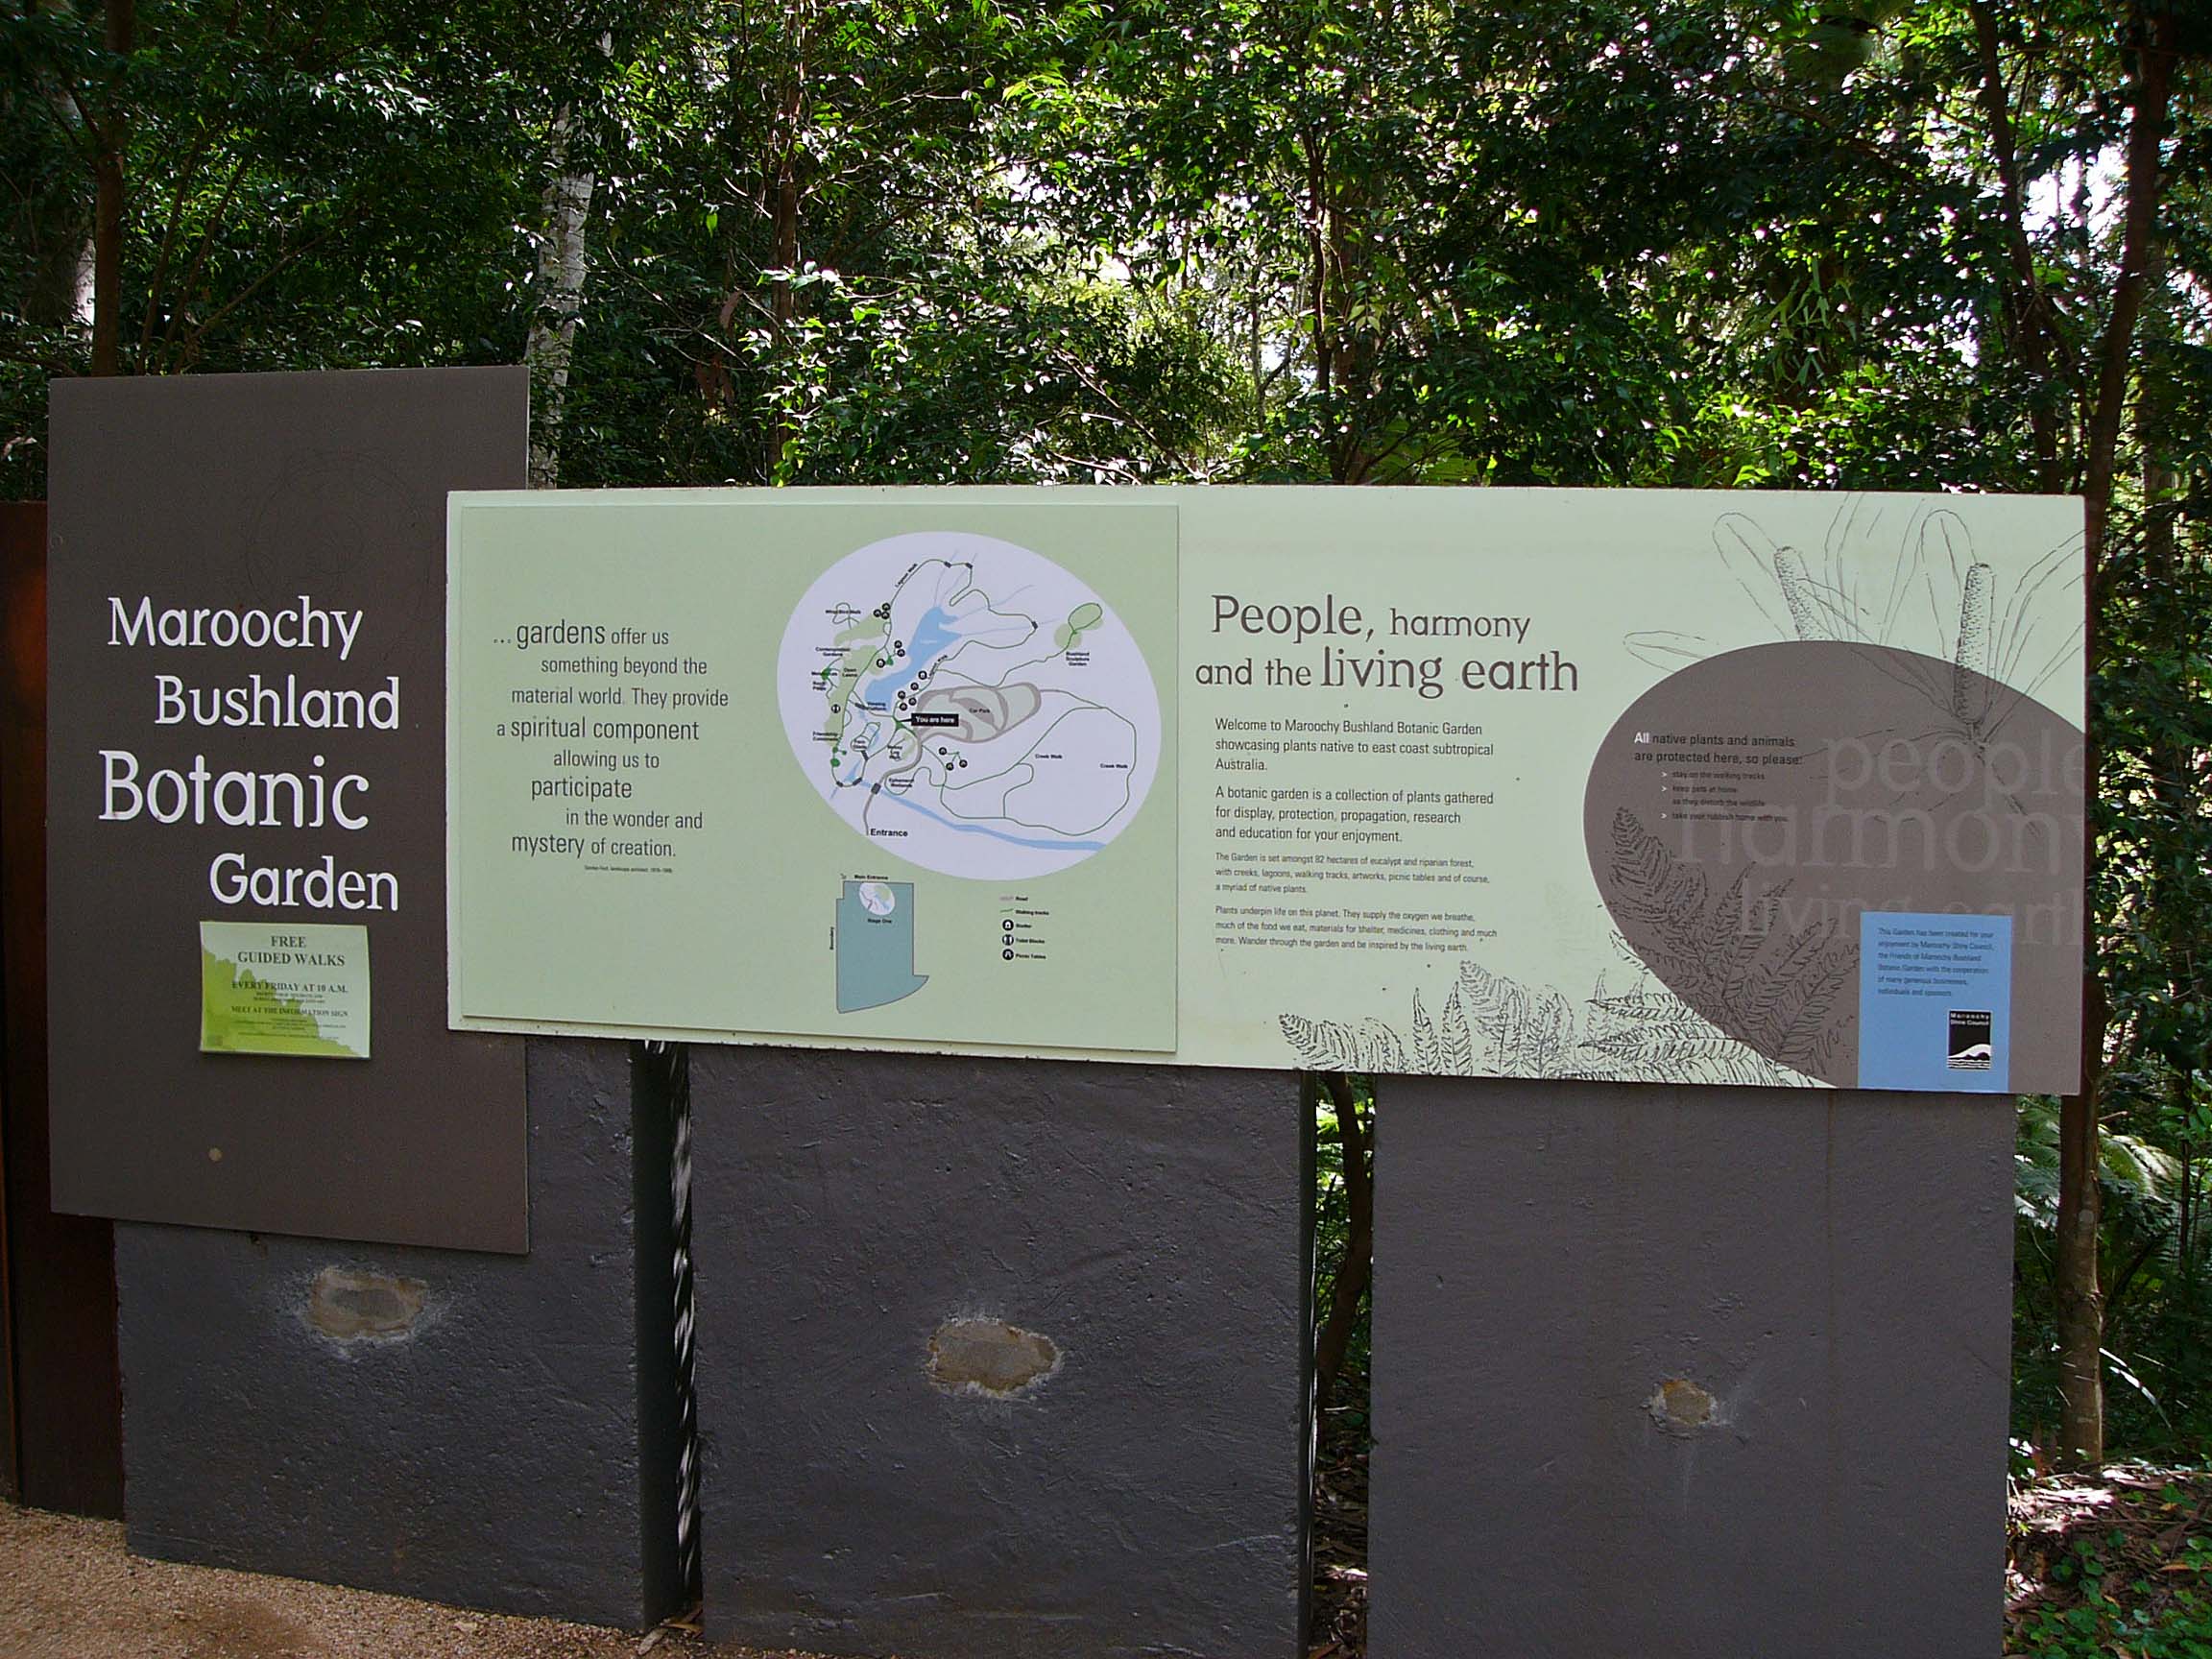 Trail Image for Maroochy Regional Bushland Botanic Garden: Sculpture Garden walk